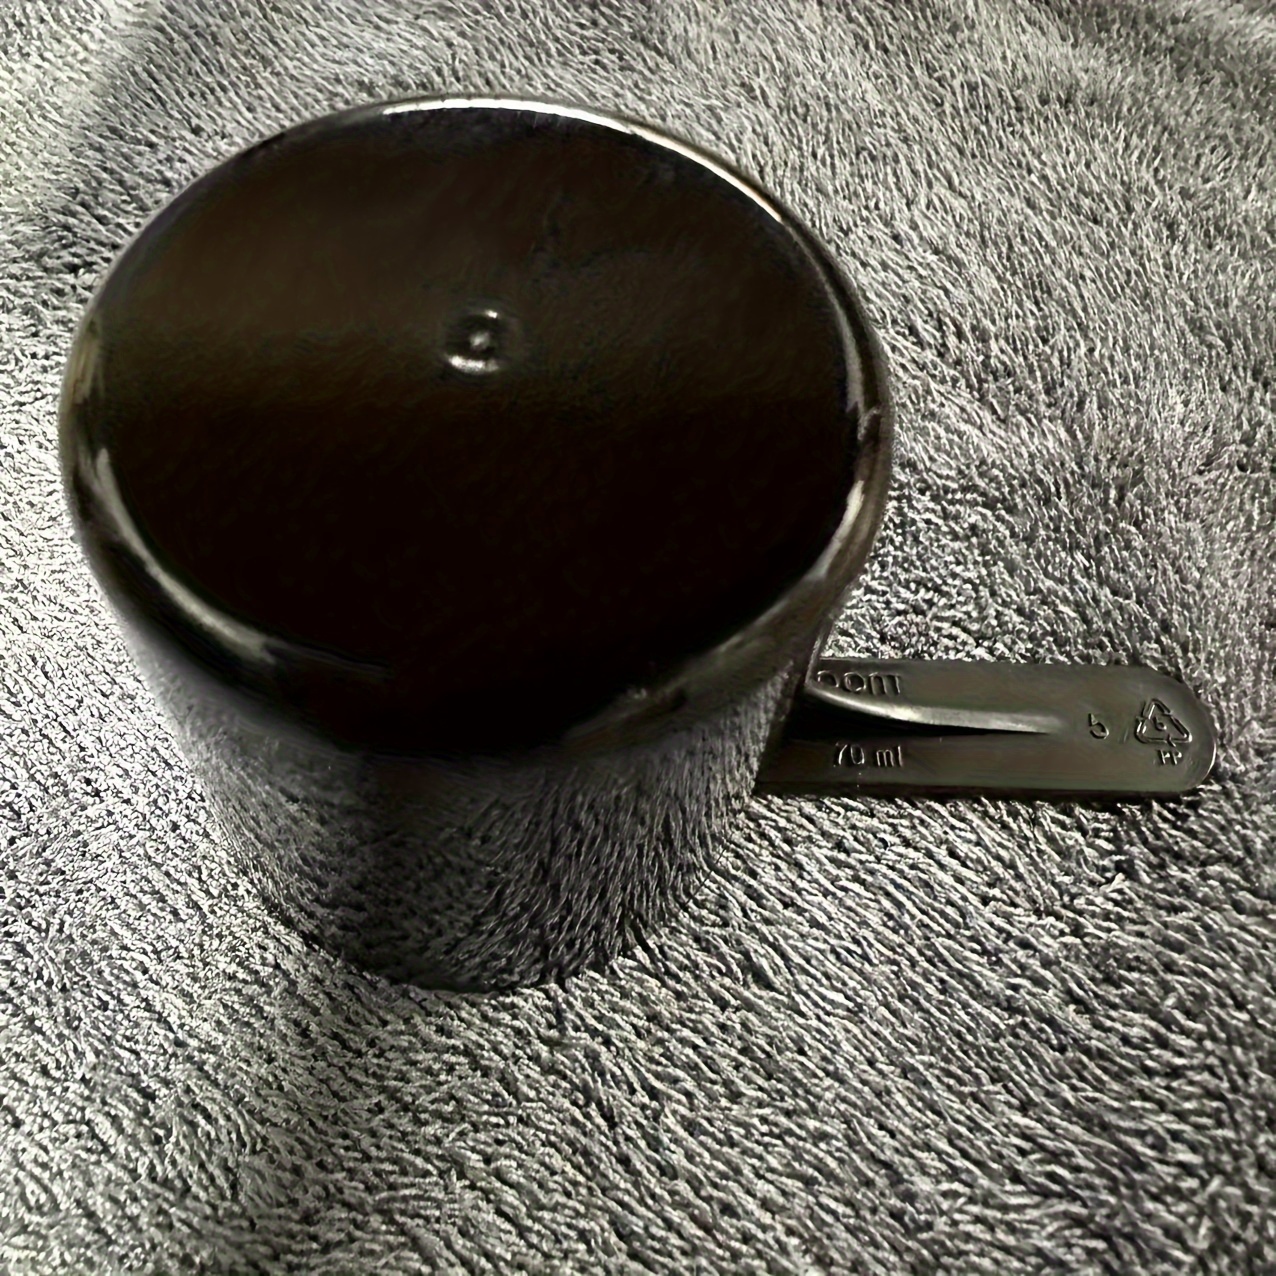 Cucharas medidoras desechables – Cuchara de café medida, cabe en frascos de  especias [20 unidades – 0.2 fl oz]